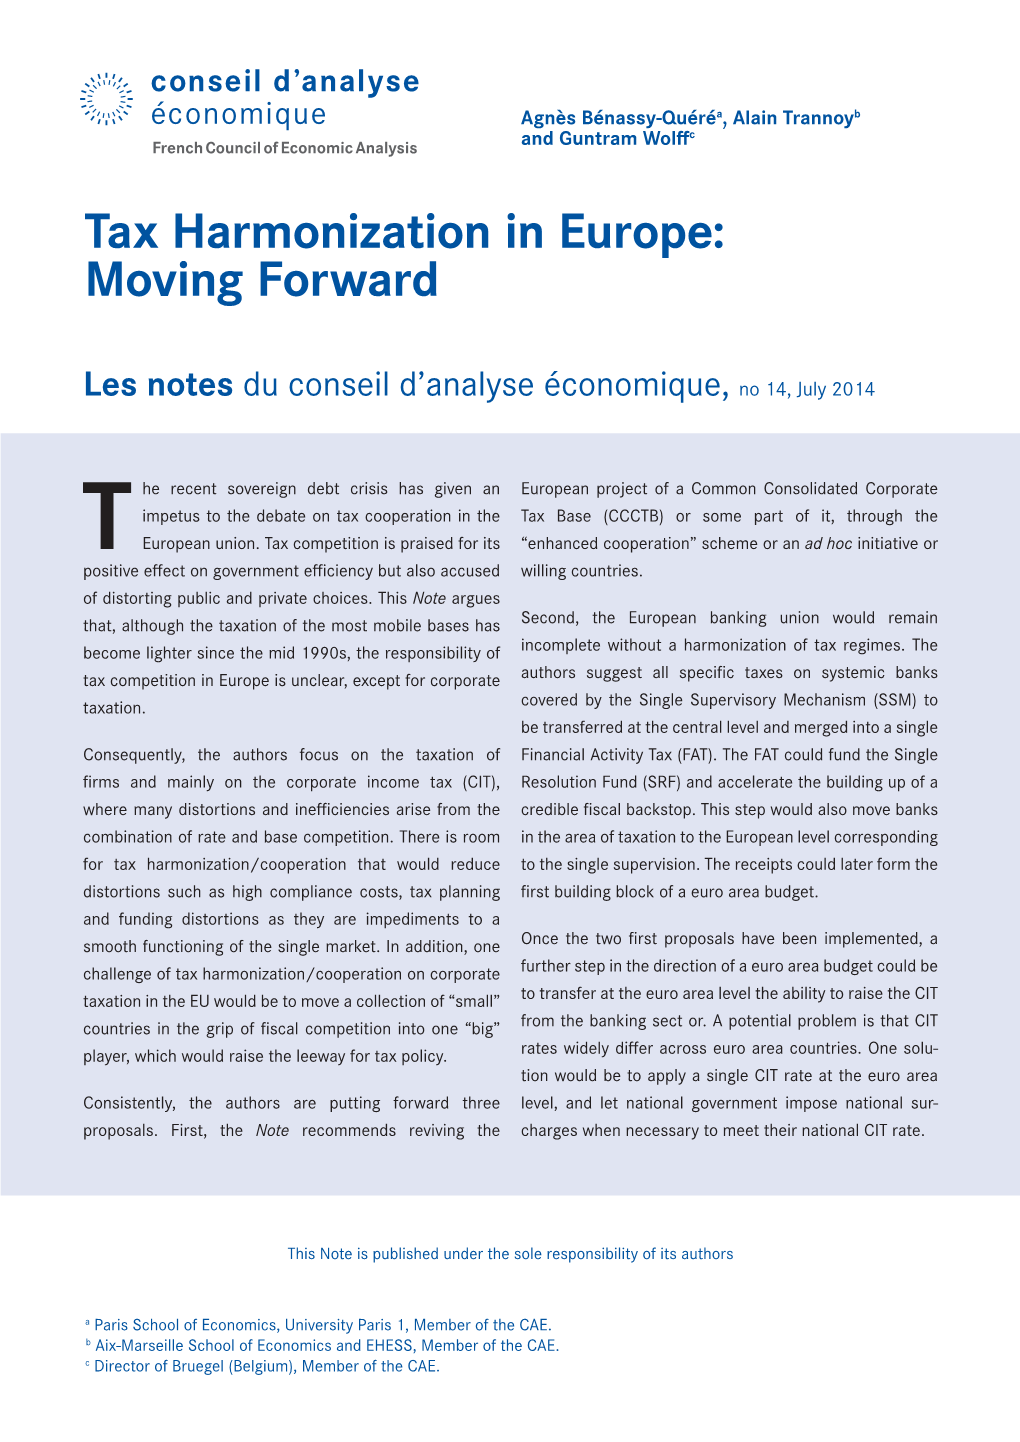 Tax Harmonization in Europe: Moving Forward